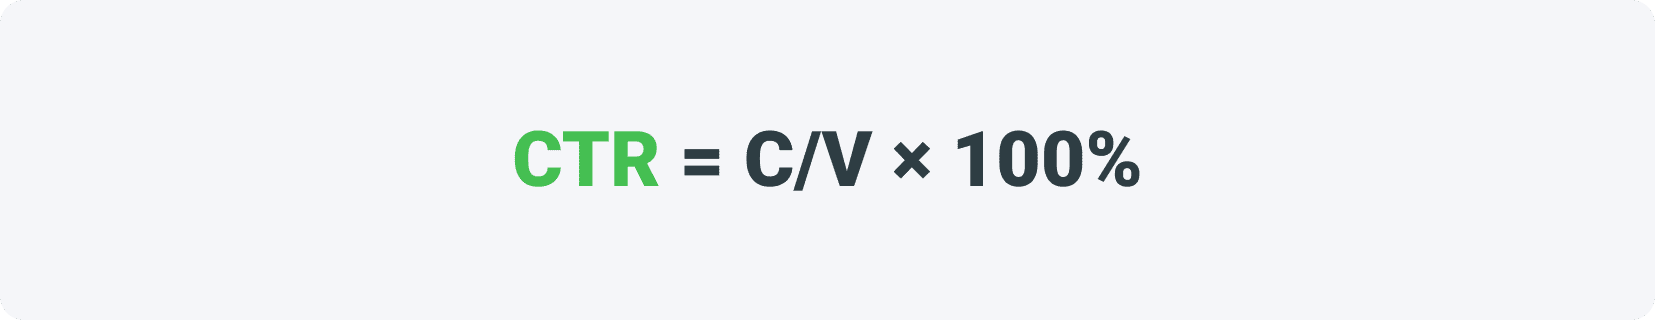 CTR=C/V*100%